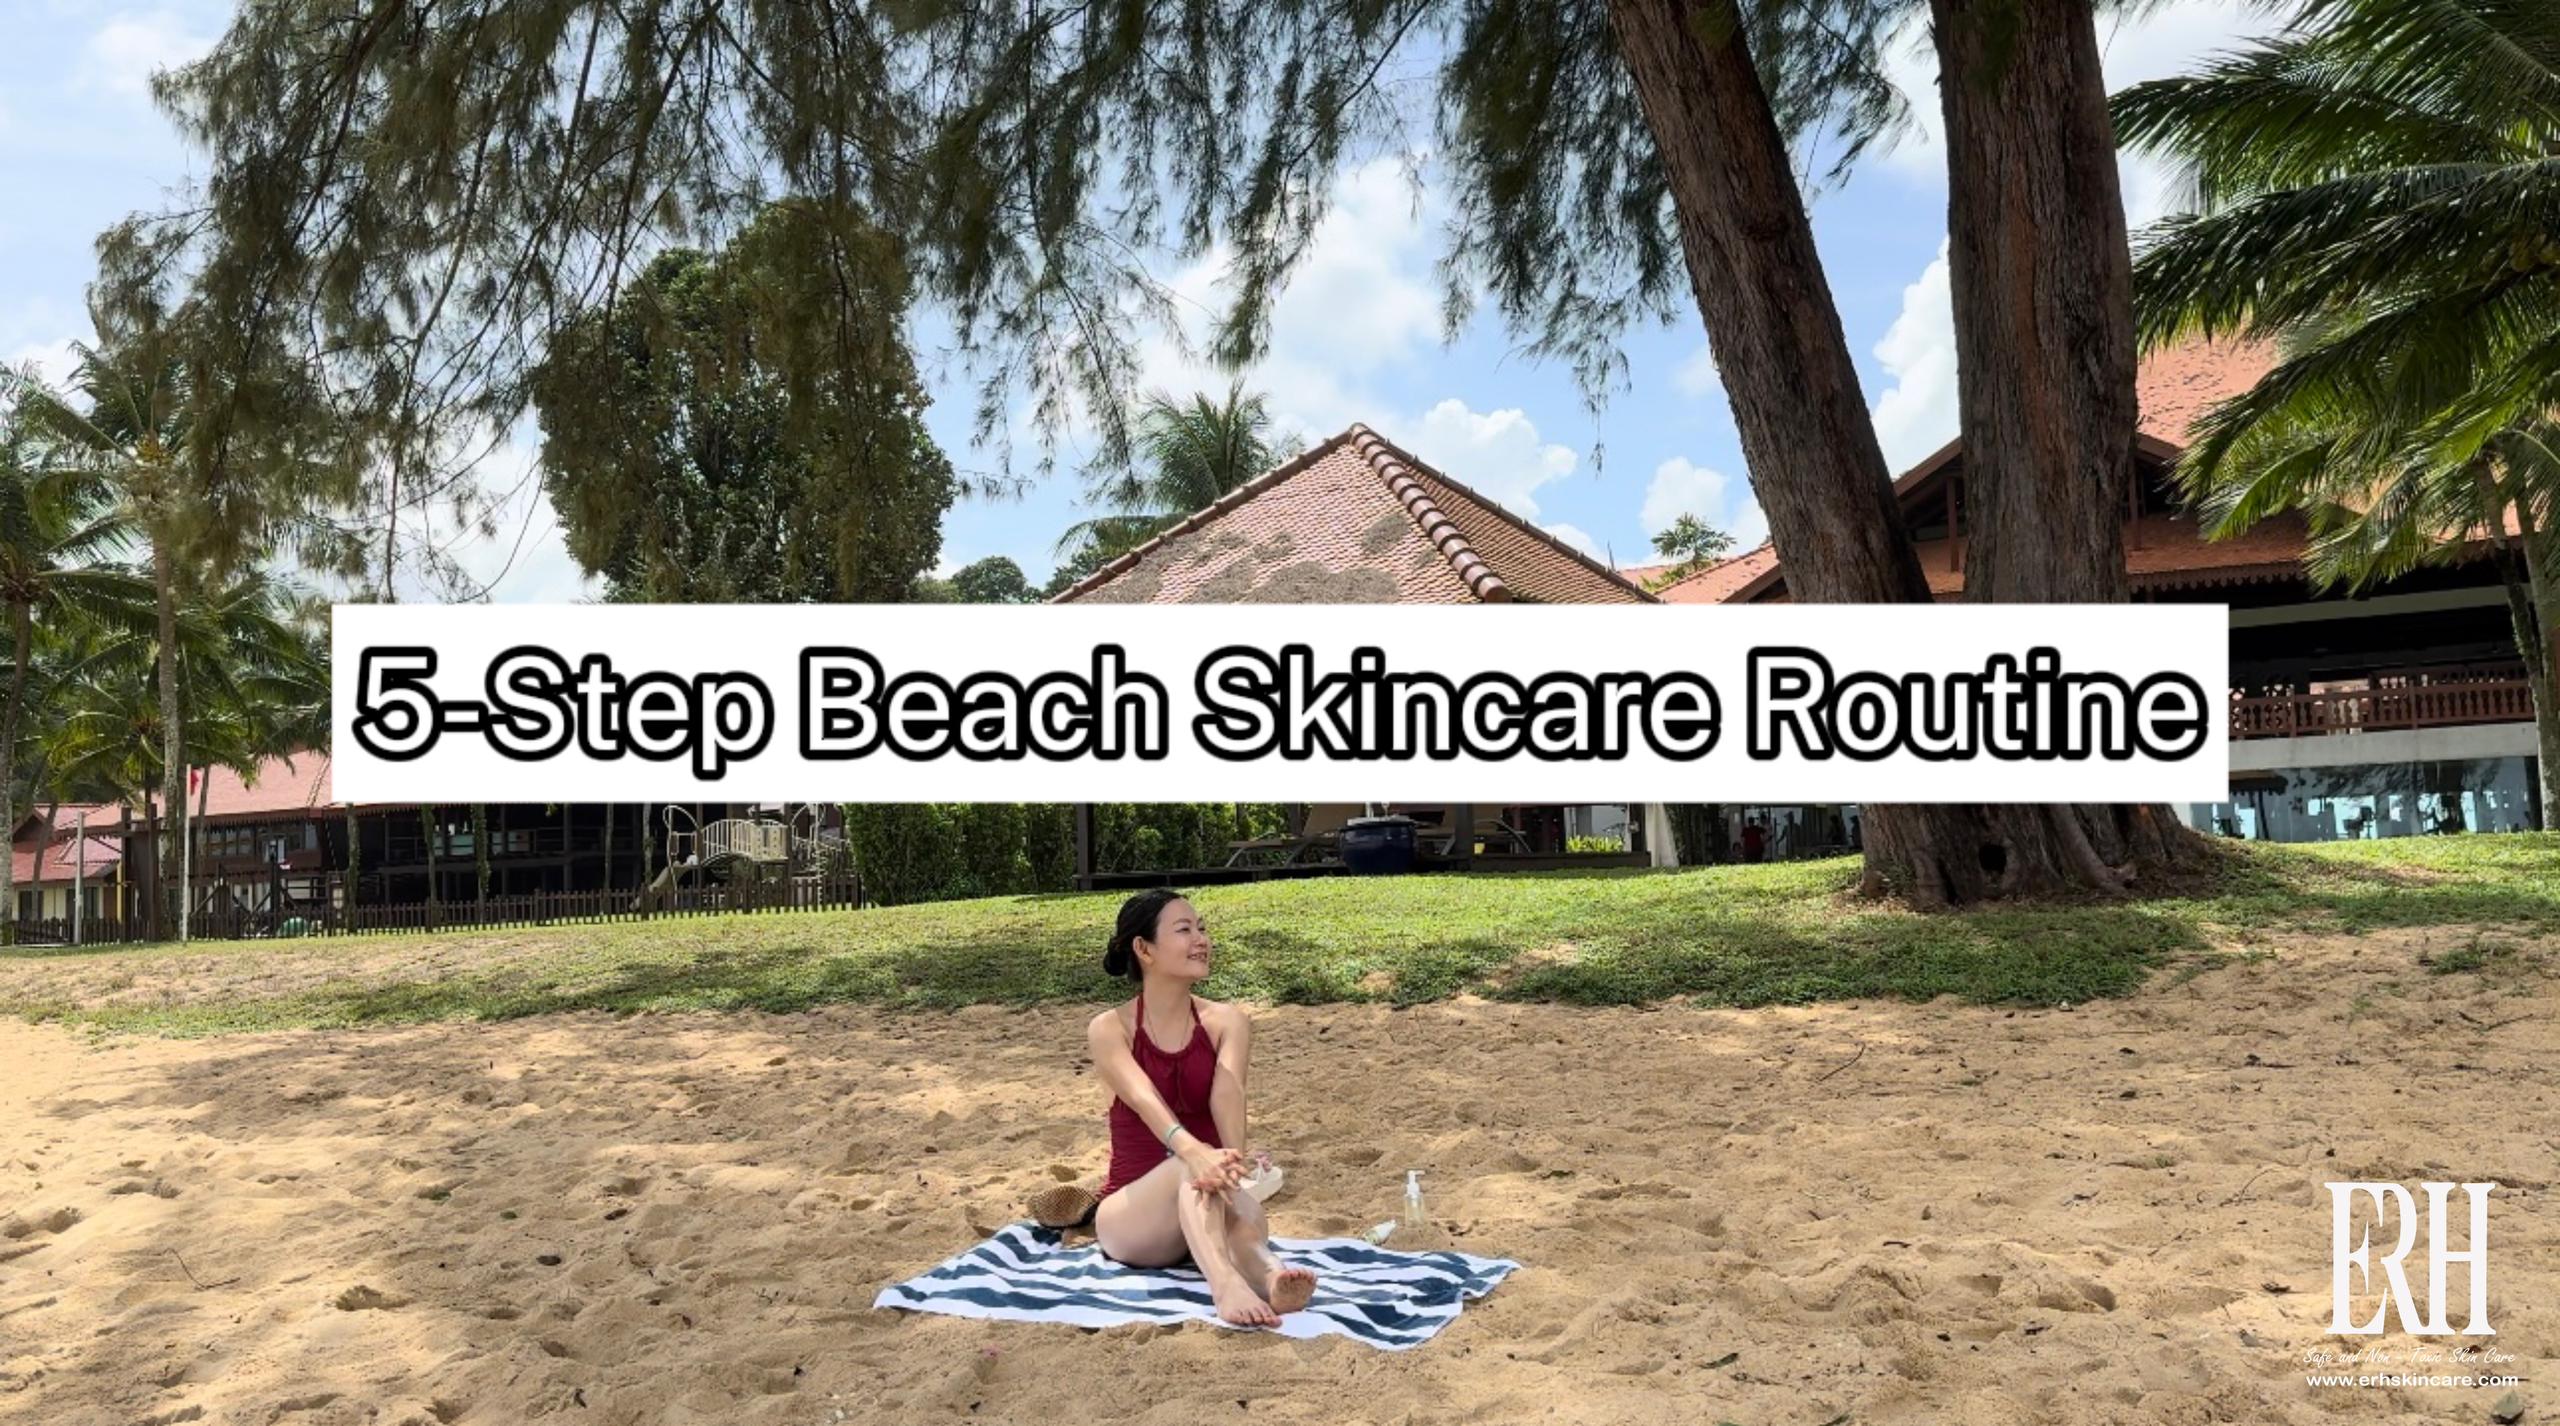 5-Step Beach Skincare Routine